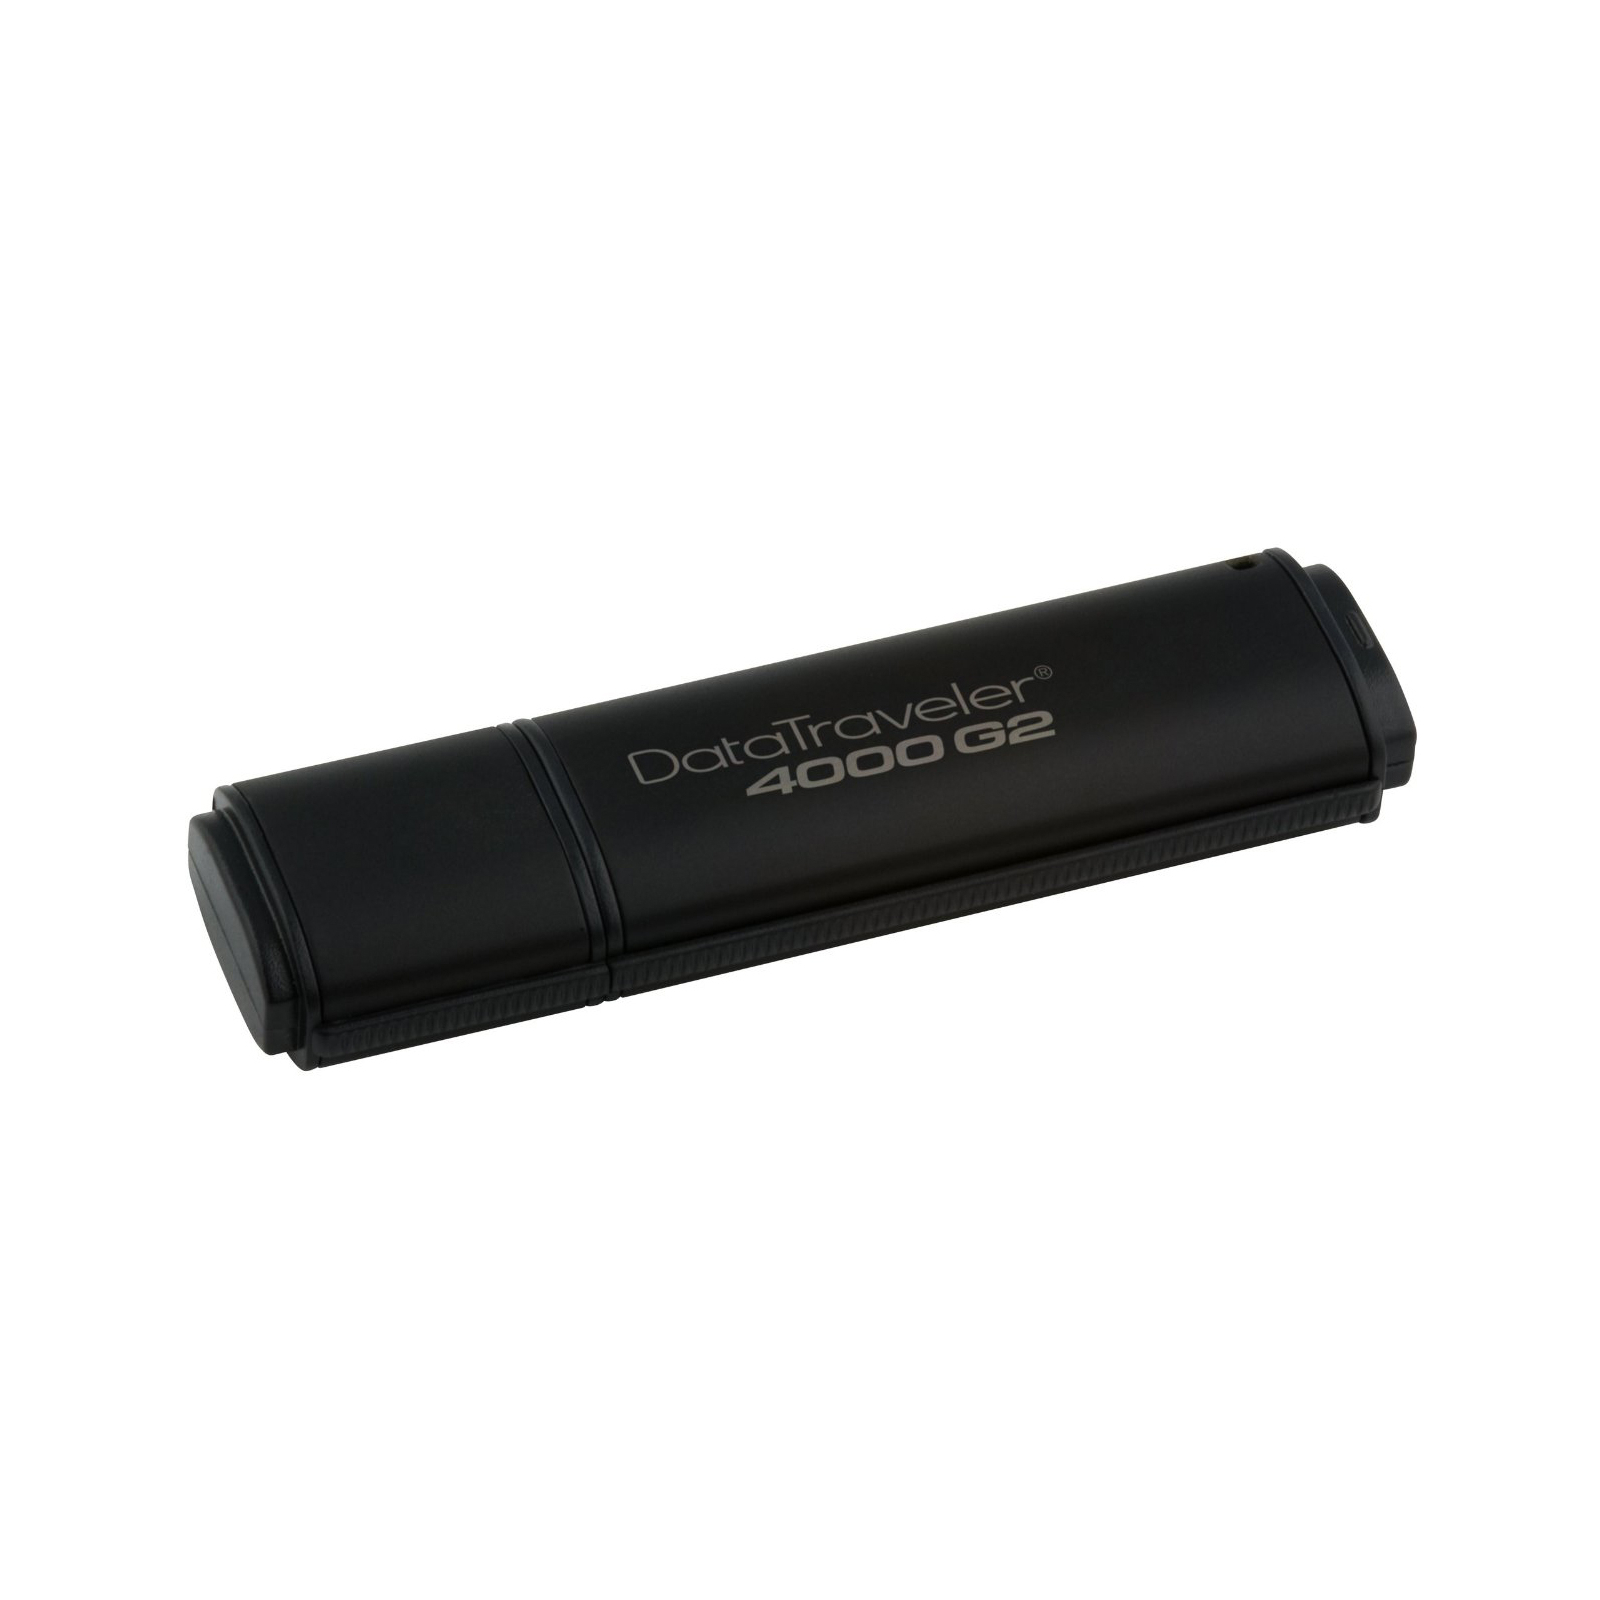 USB флеш накопитель Kingston 8GB DataTraveler 4000 G2 Metal Black USB 3.0 (DT4000G2/8GB) изображение 2